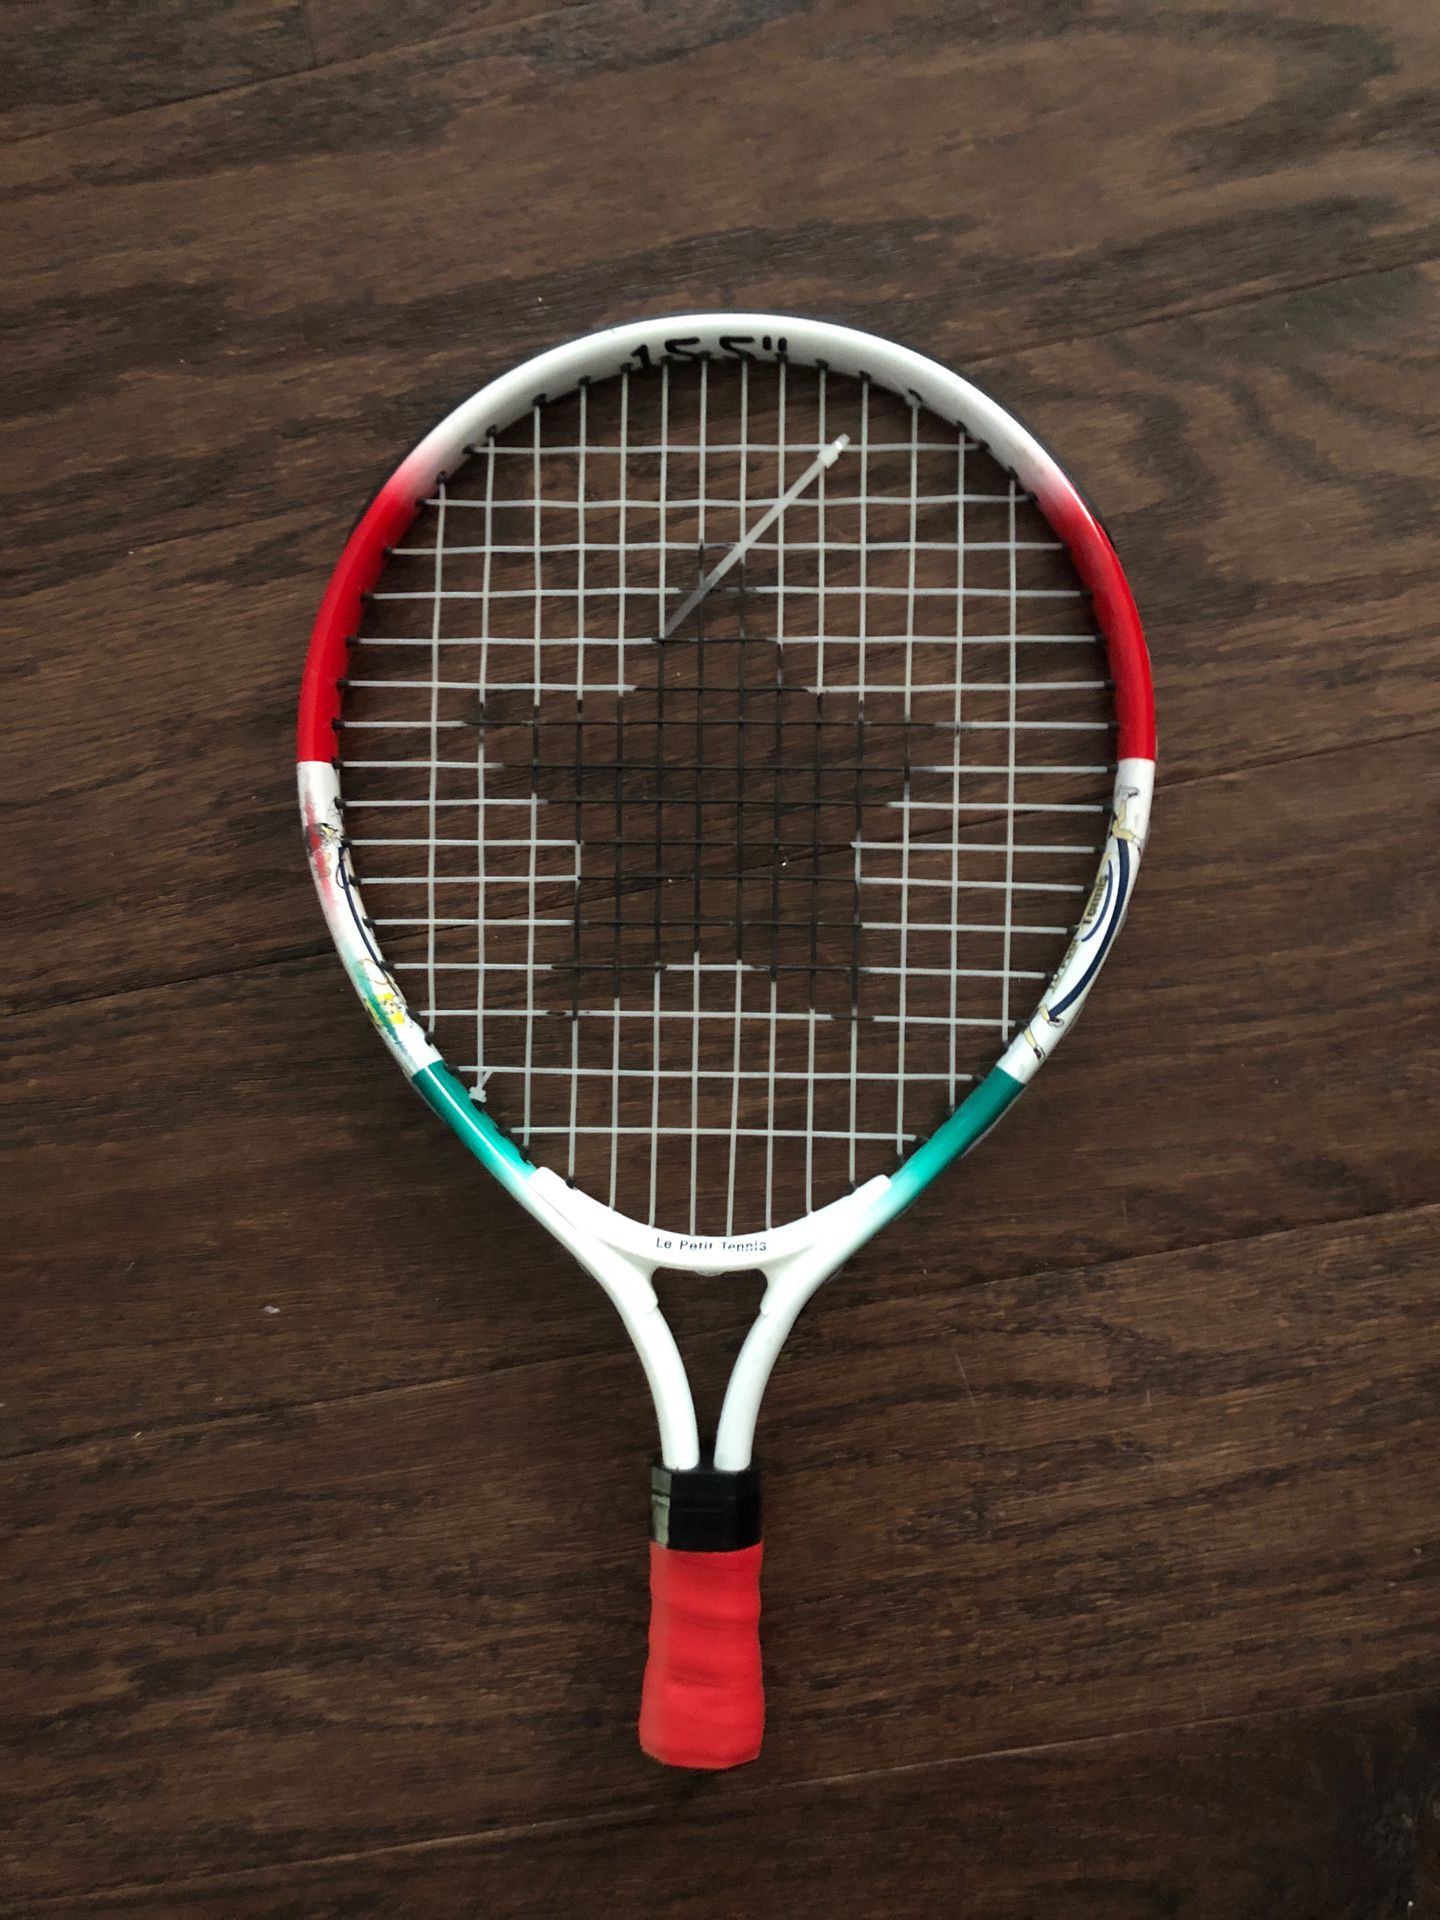 $10 junior tennis racket